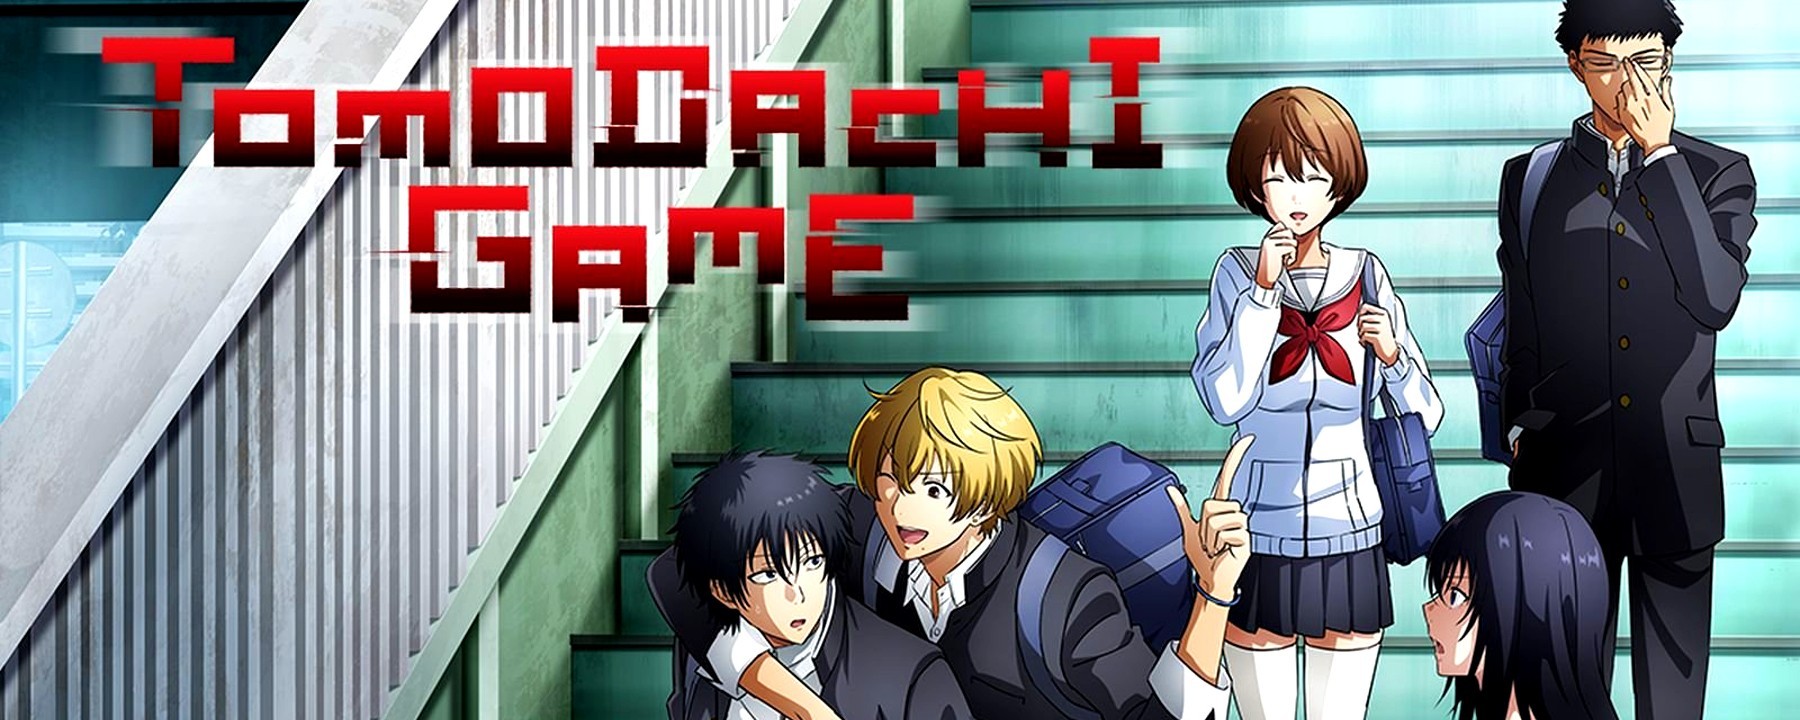 NEWS: Yuichi and Tenji join the game - Anime Corner News